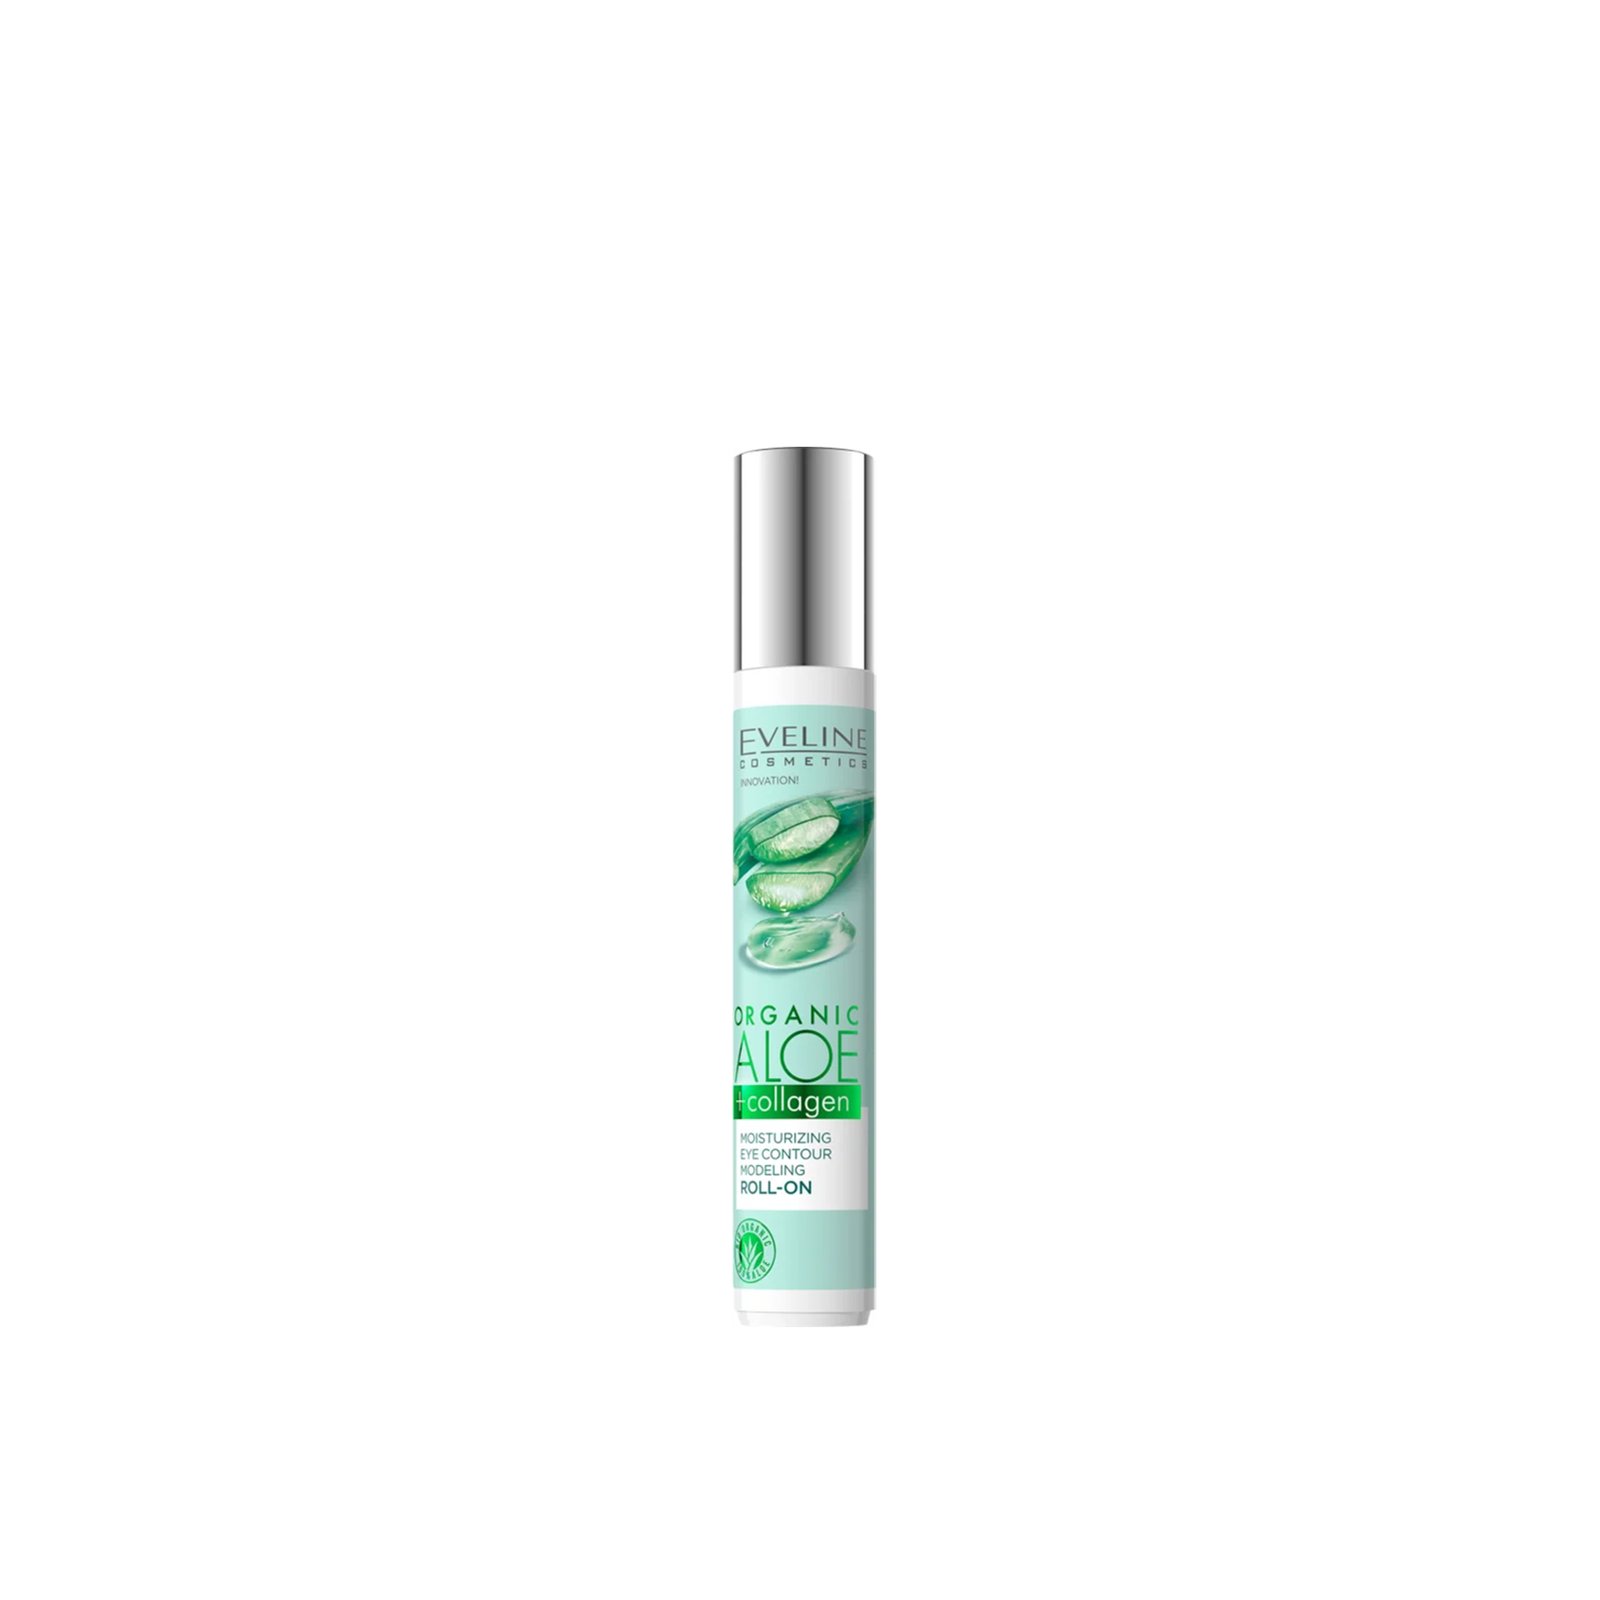 Eveline Cosmetics Organic Aloe + Collagen Moisturizing Eye Contour Modeling Roll-On 15ml (0.53 fl oz)